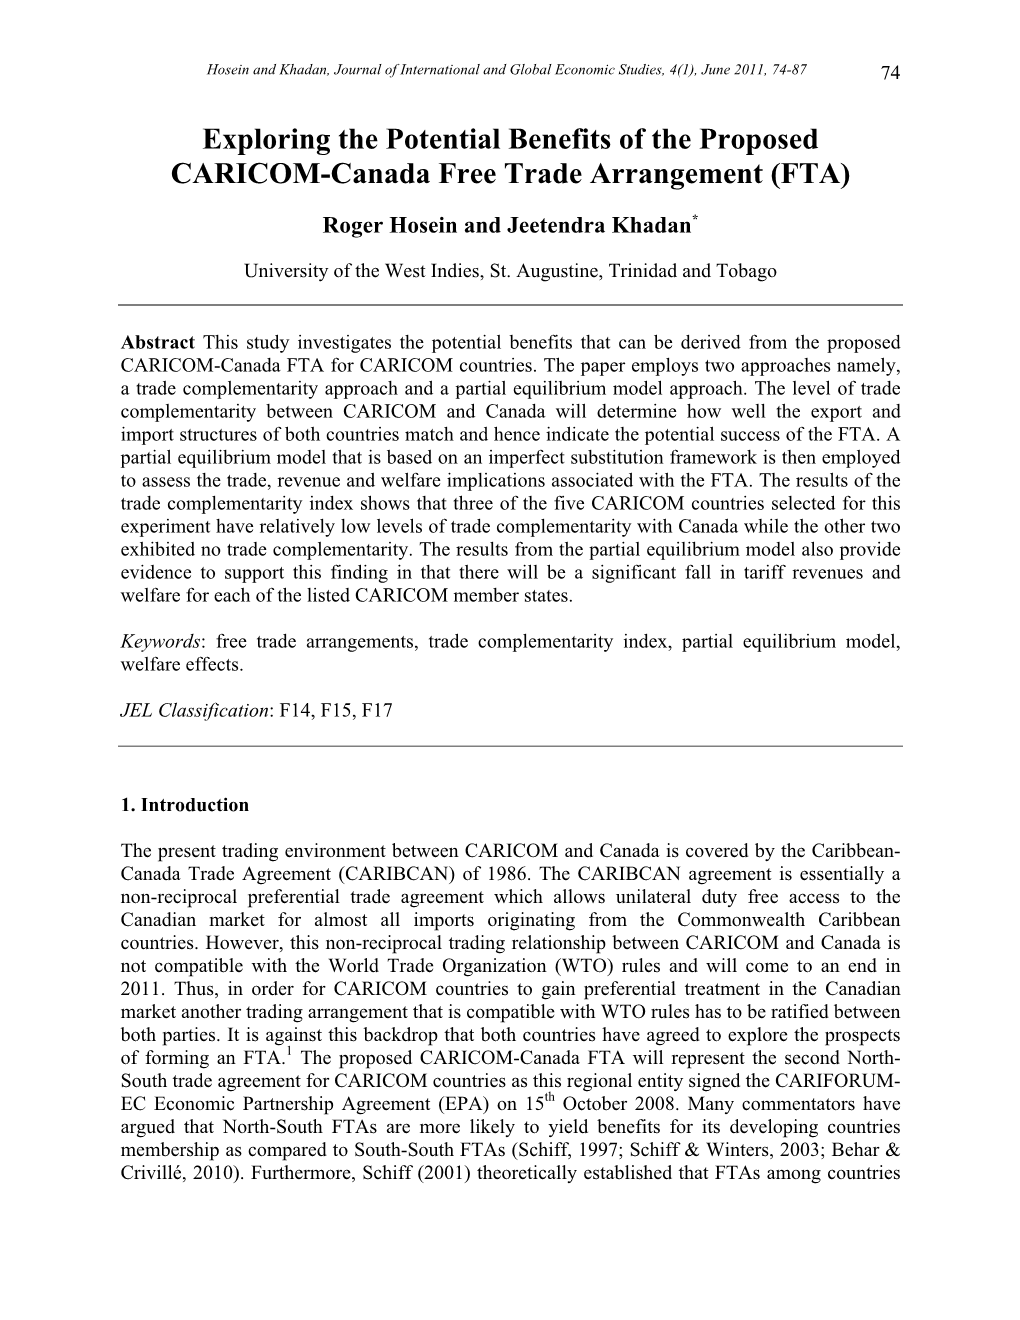 Exploring the Potential Benefits of the Proposed CARICOM-Canada Free Trade Arrangement (FTA)